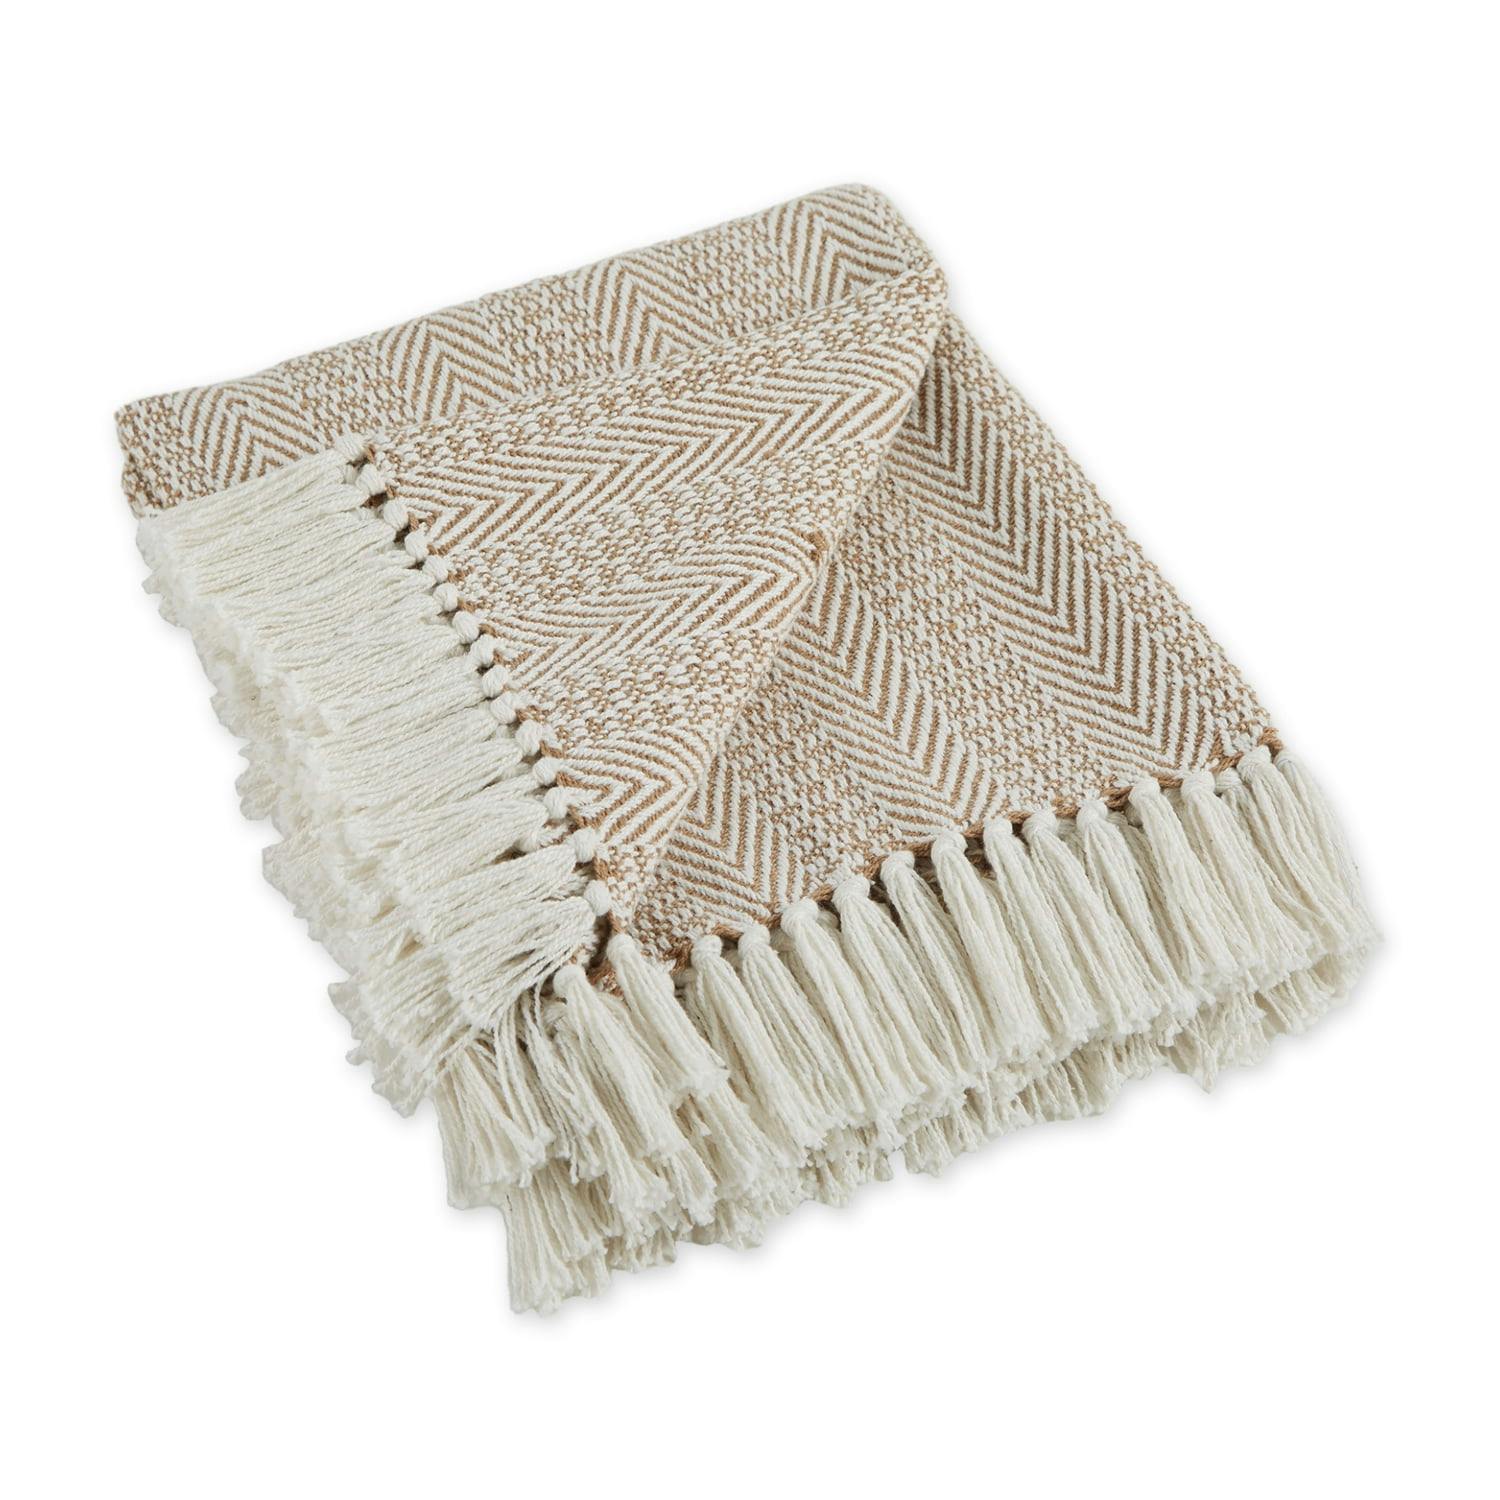 Herringbone Stripe Stone Cotton Throw Blanket, 50x60 with Fringe